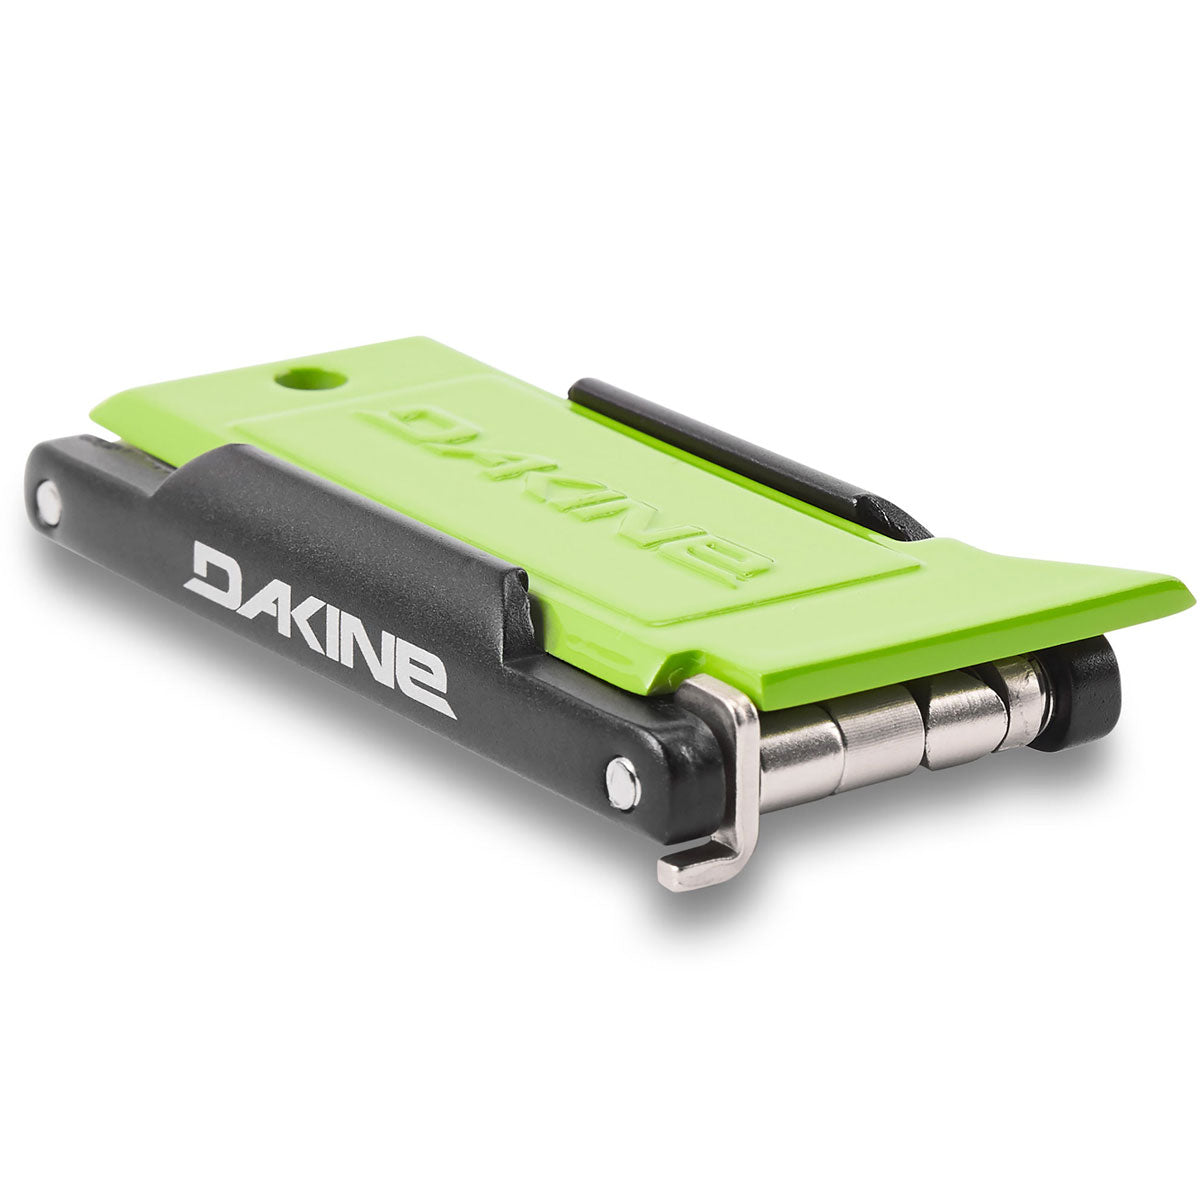 Dakine Bc Snowboard Tools & Locks - Green image 4